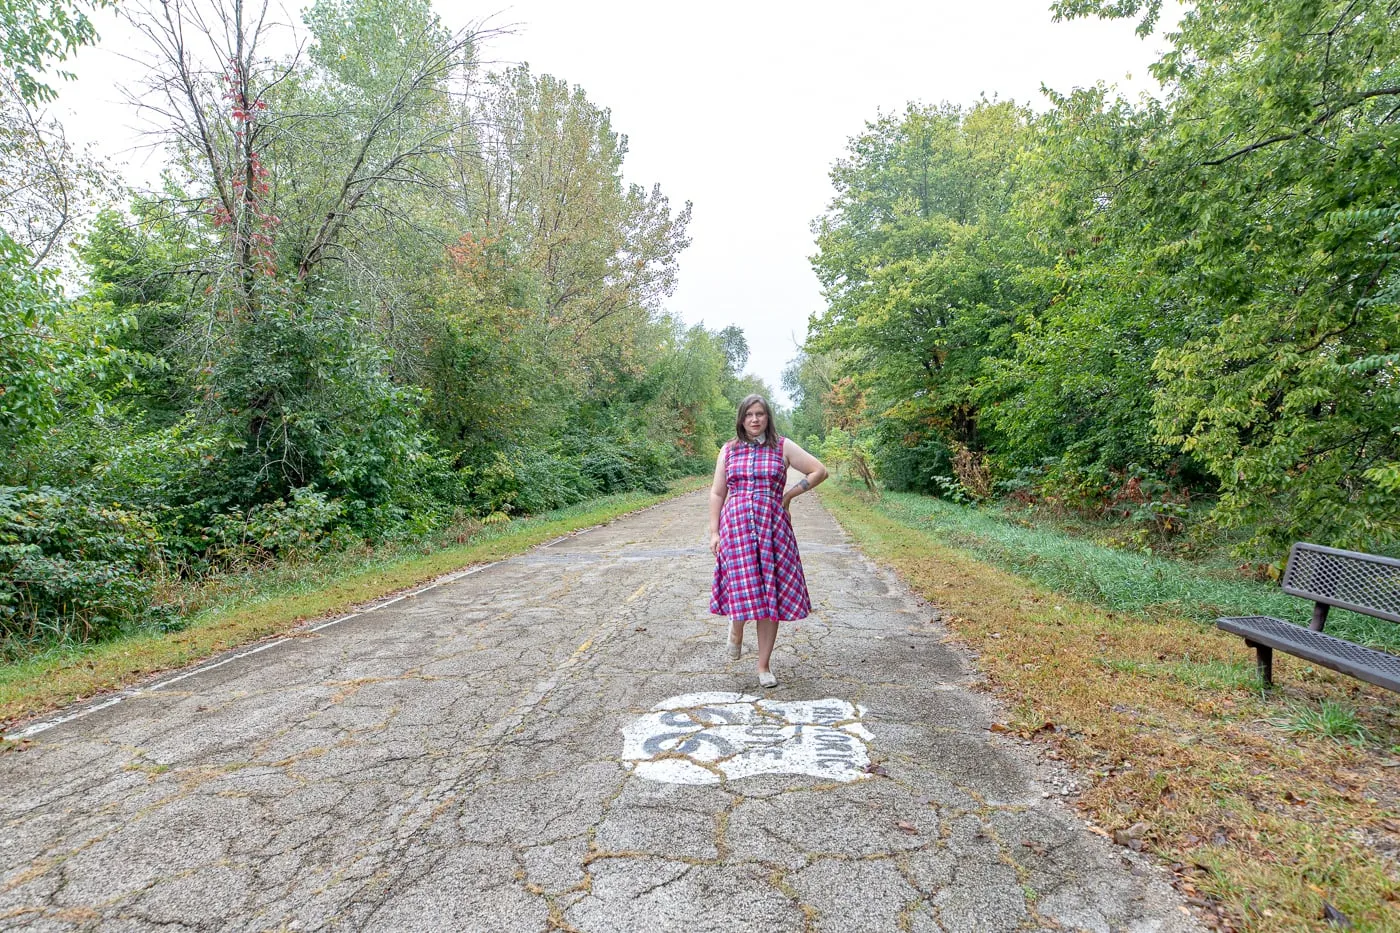 Walking on the original road at Route 66 Memory Lane in Lexington, Illinois